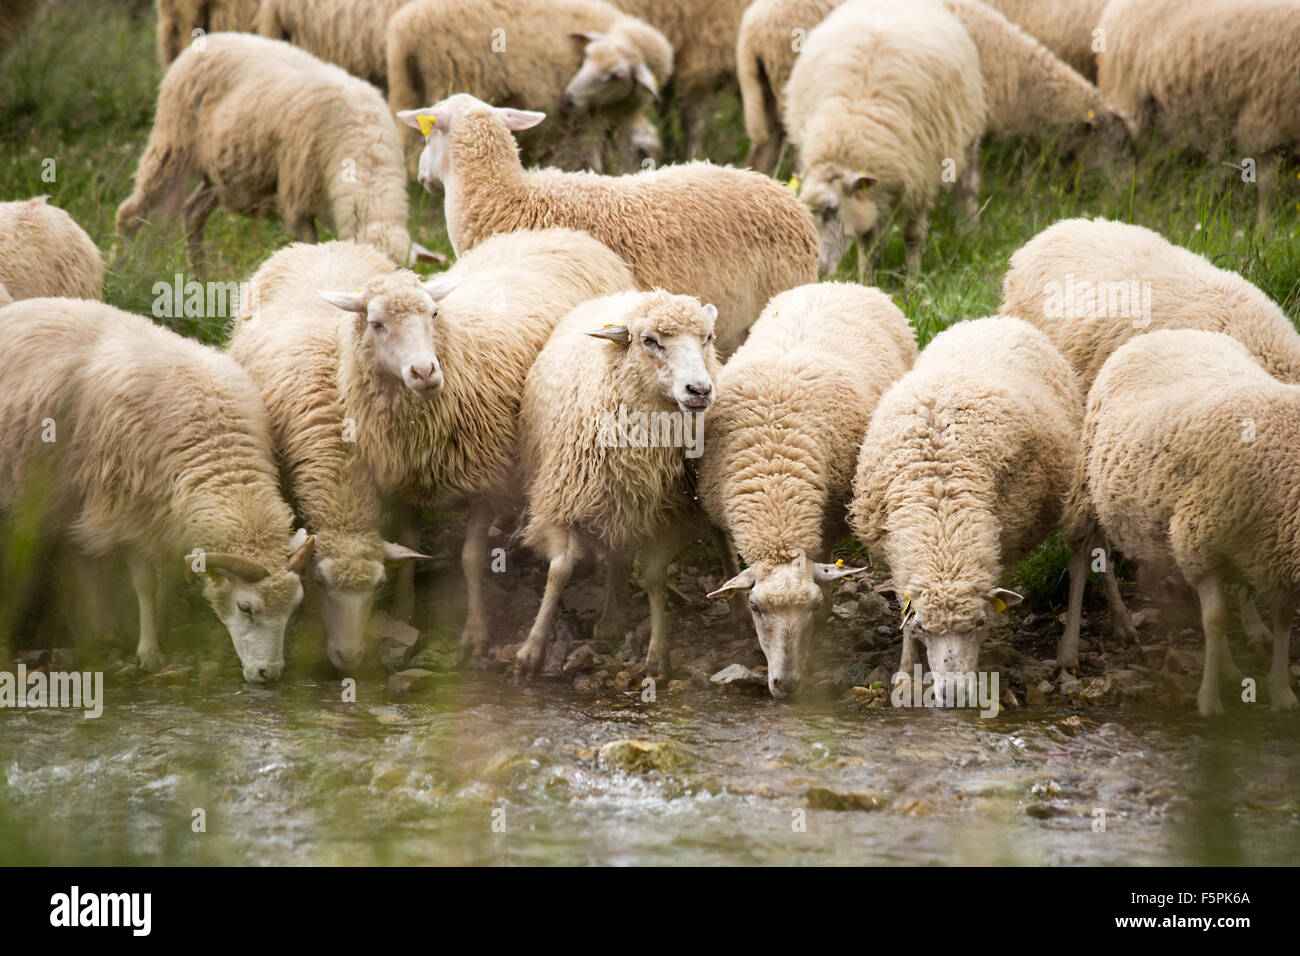 Livestock farm - herd of sheep Stock Photo